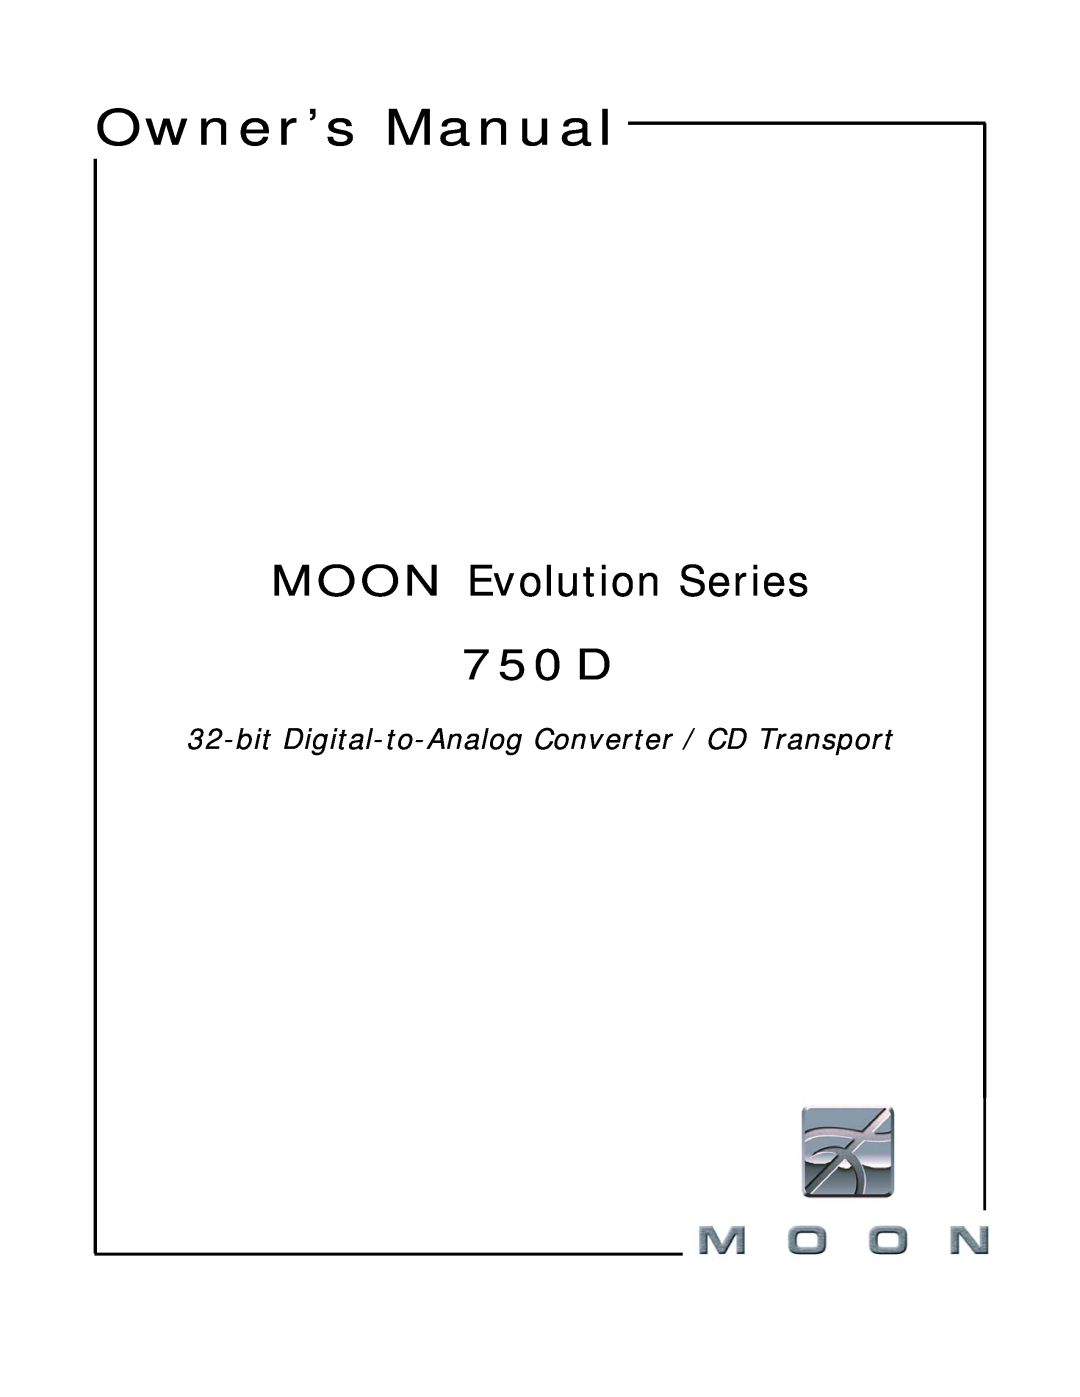 Simaudio owner manual Owner’s Manual, MOON Evolution Series 750 D, bit Digital-to-Analog Converter / CD Transport 